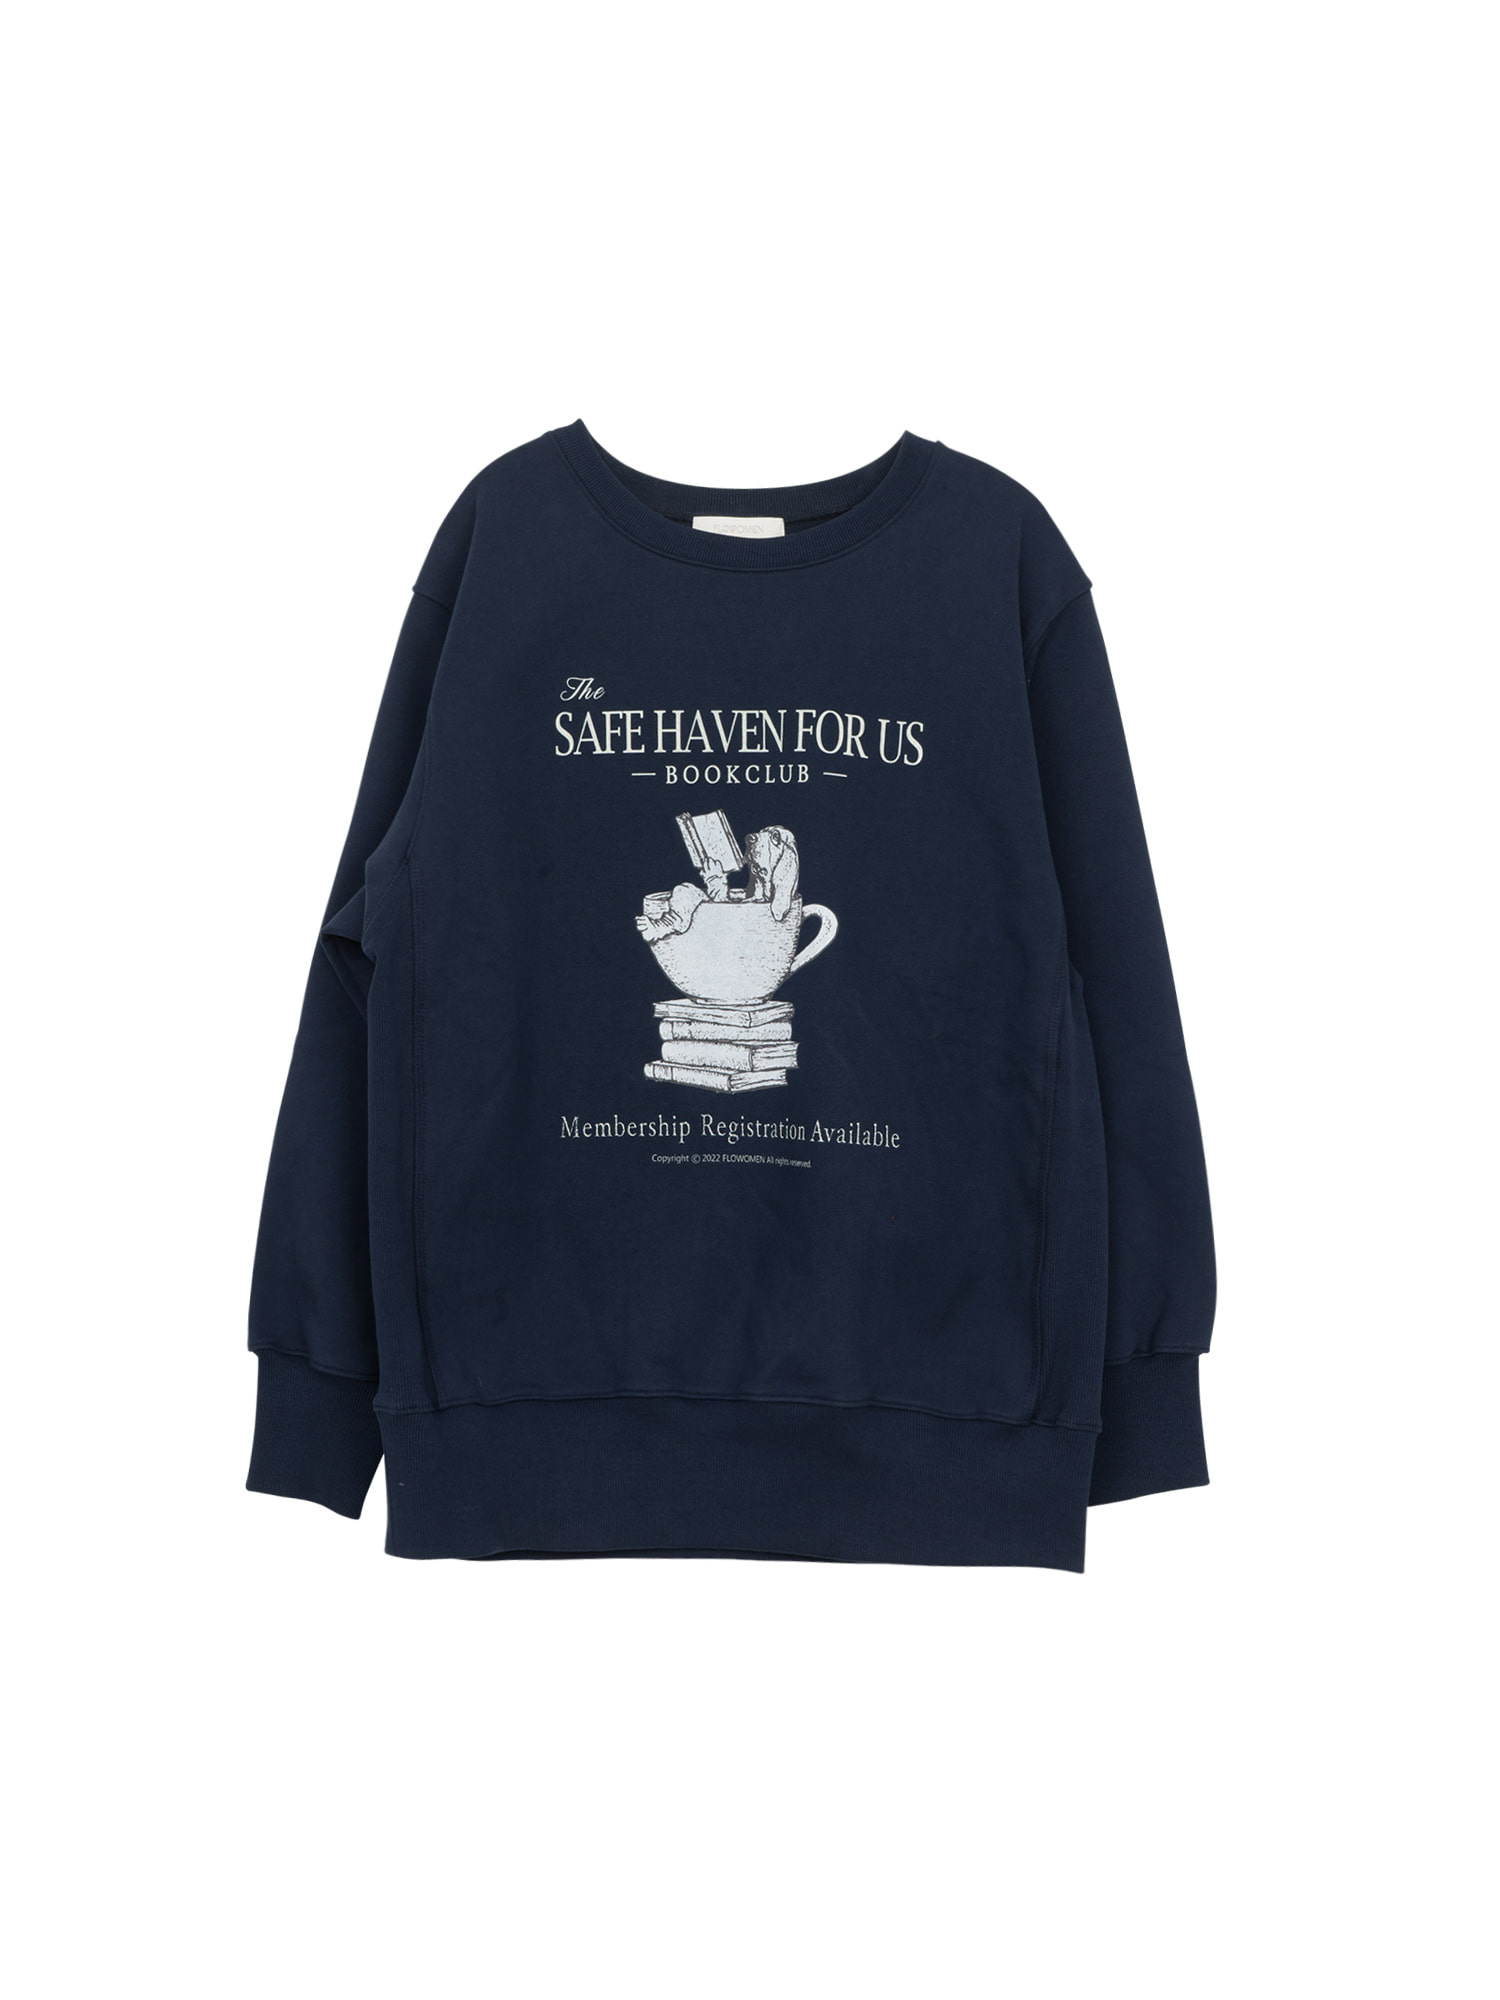 Bookclub Crewneck Sweatshirt - Navy